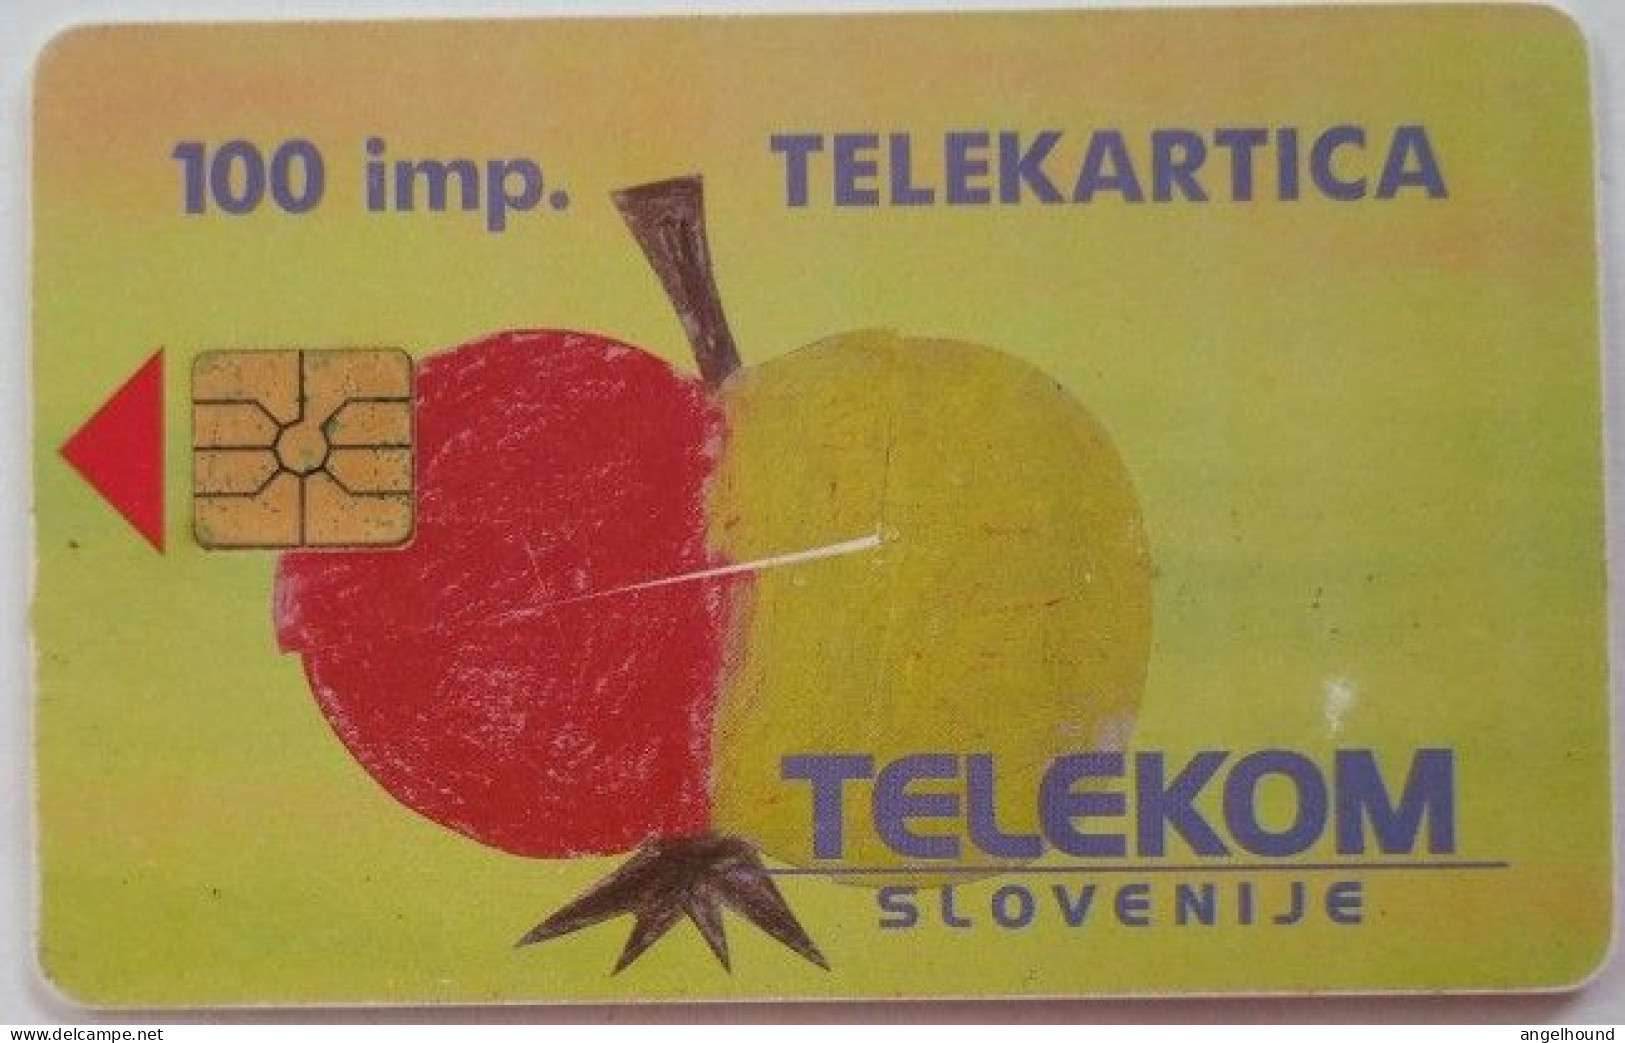 Slovenia 100 Unit Chip Card - Apple - Slovenia